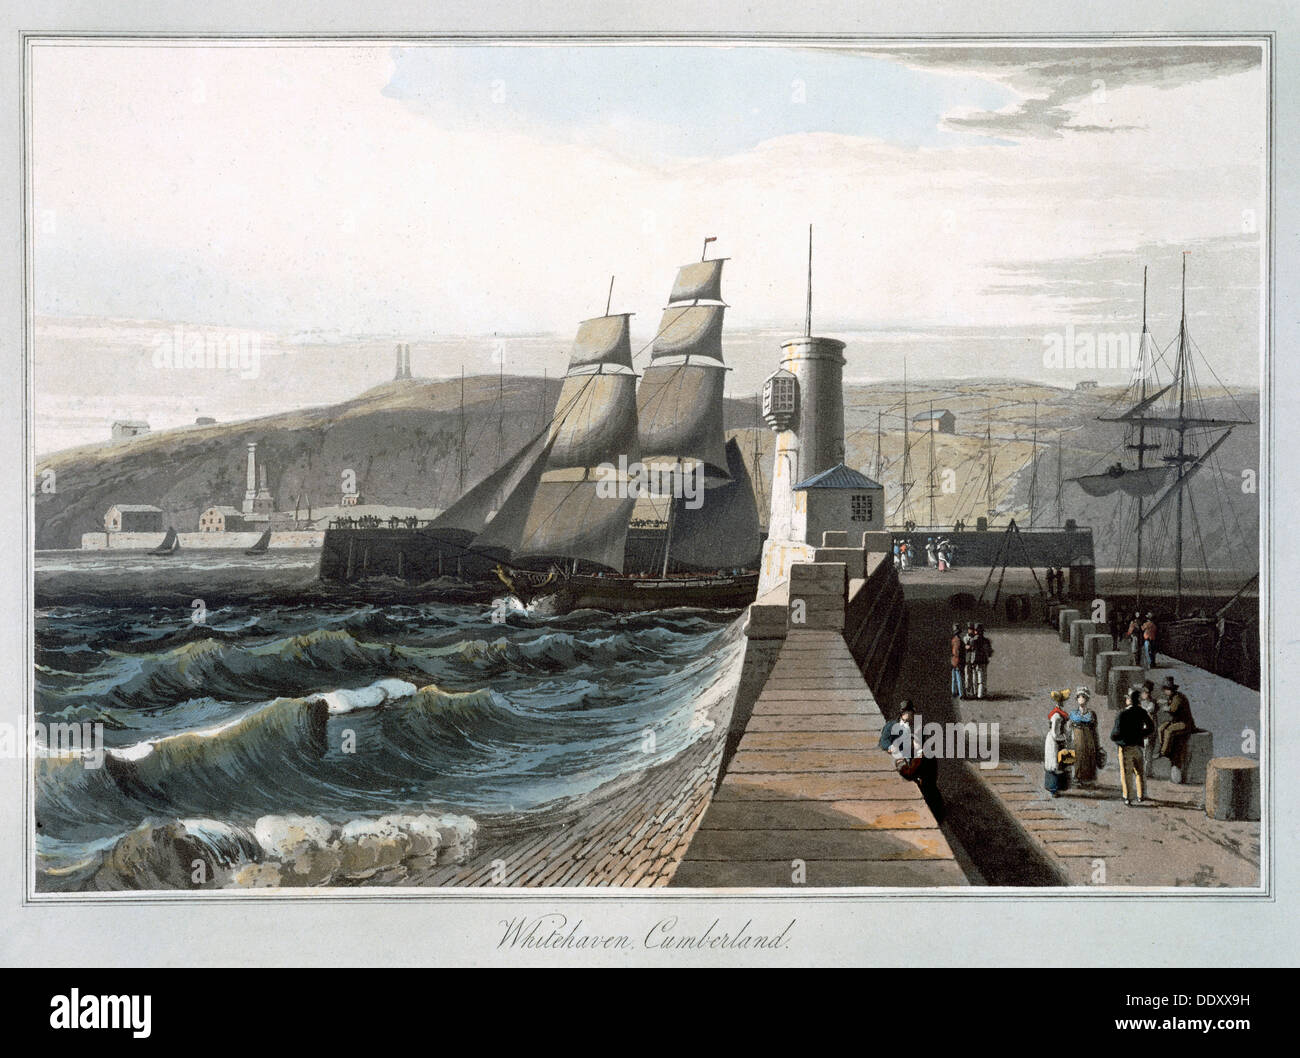 "Whitehaven, Cumberland', 1814-1825. Artista: William Daniell Foto Stock